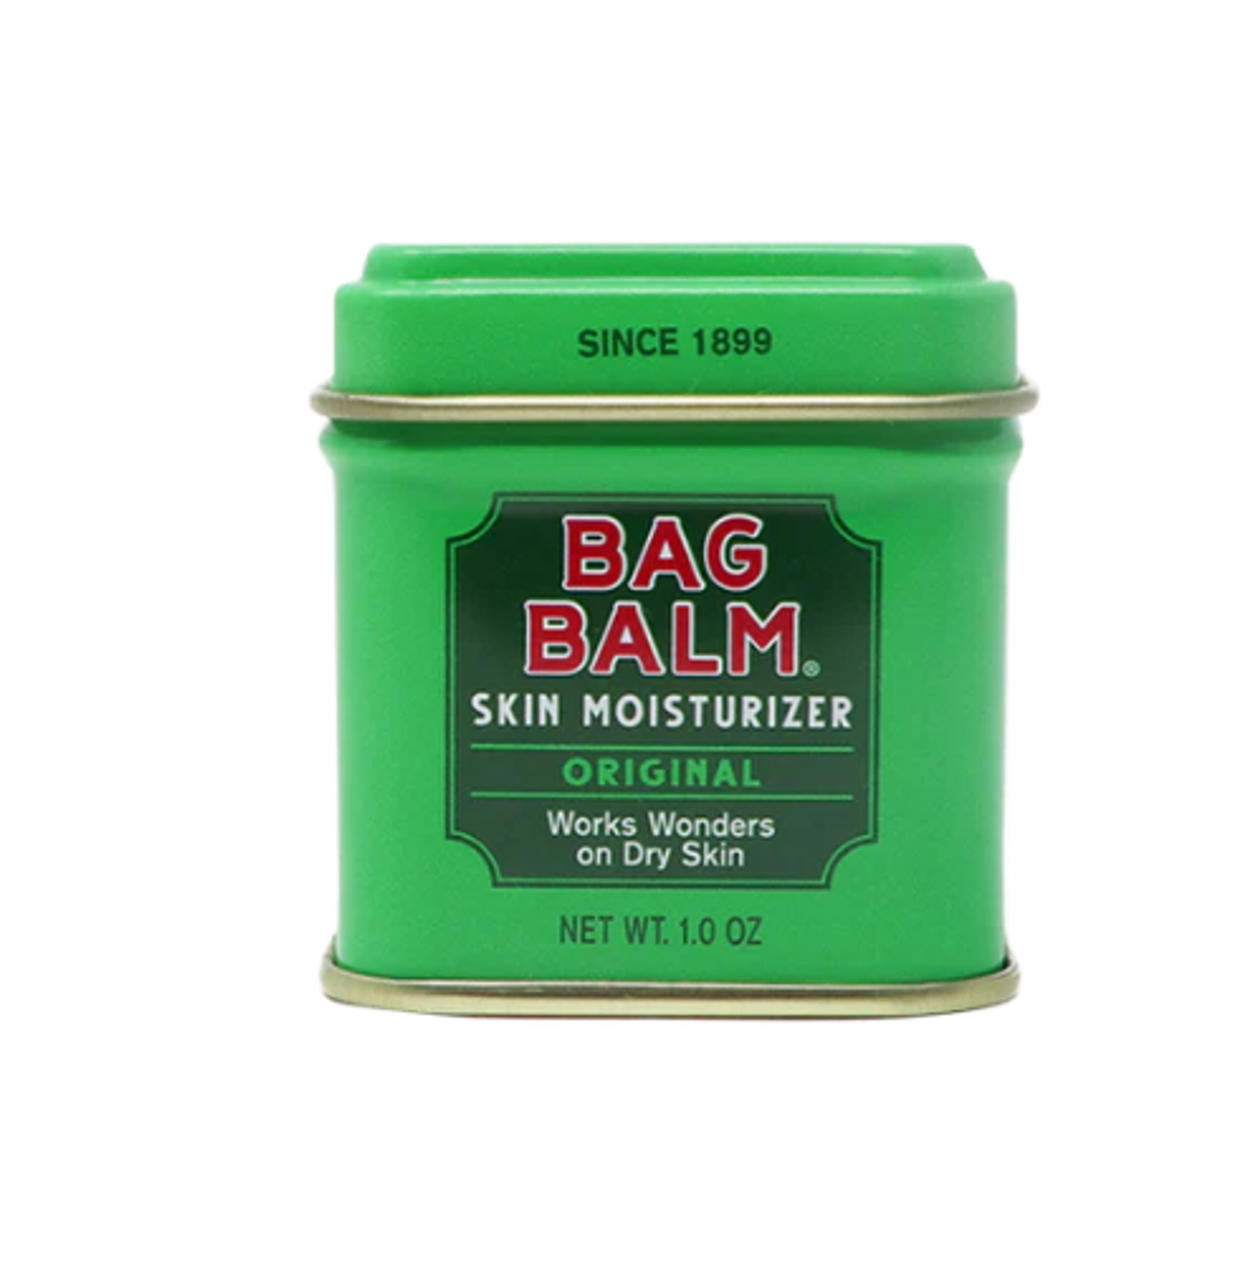 1oz Vermont's Original Bag Balm Tin